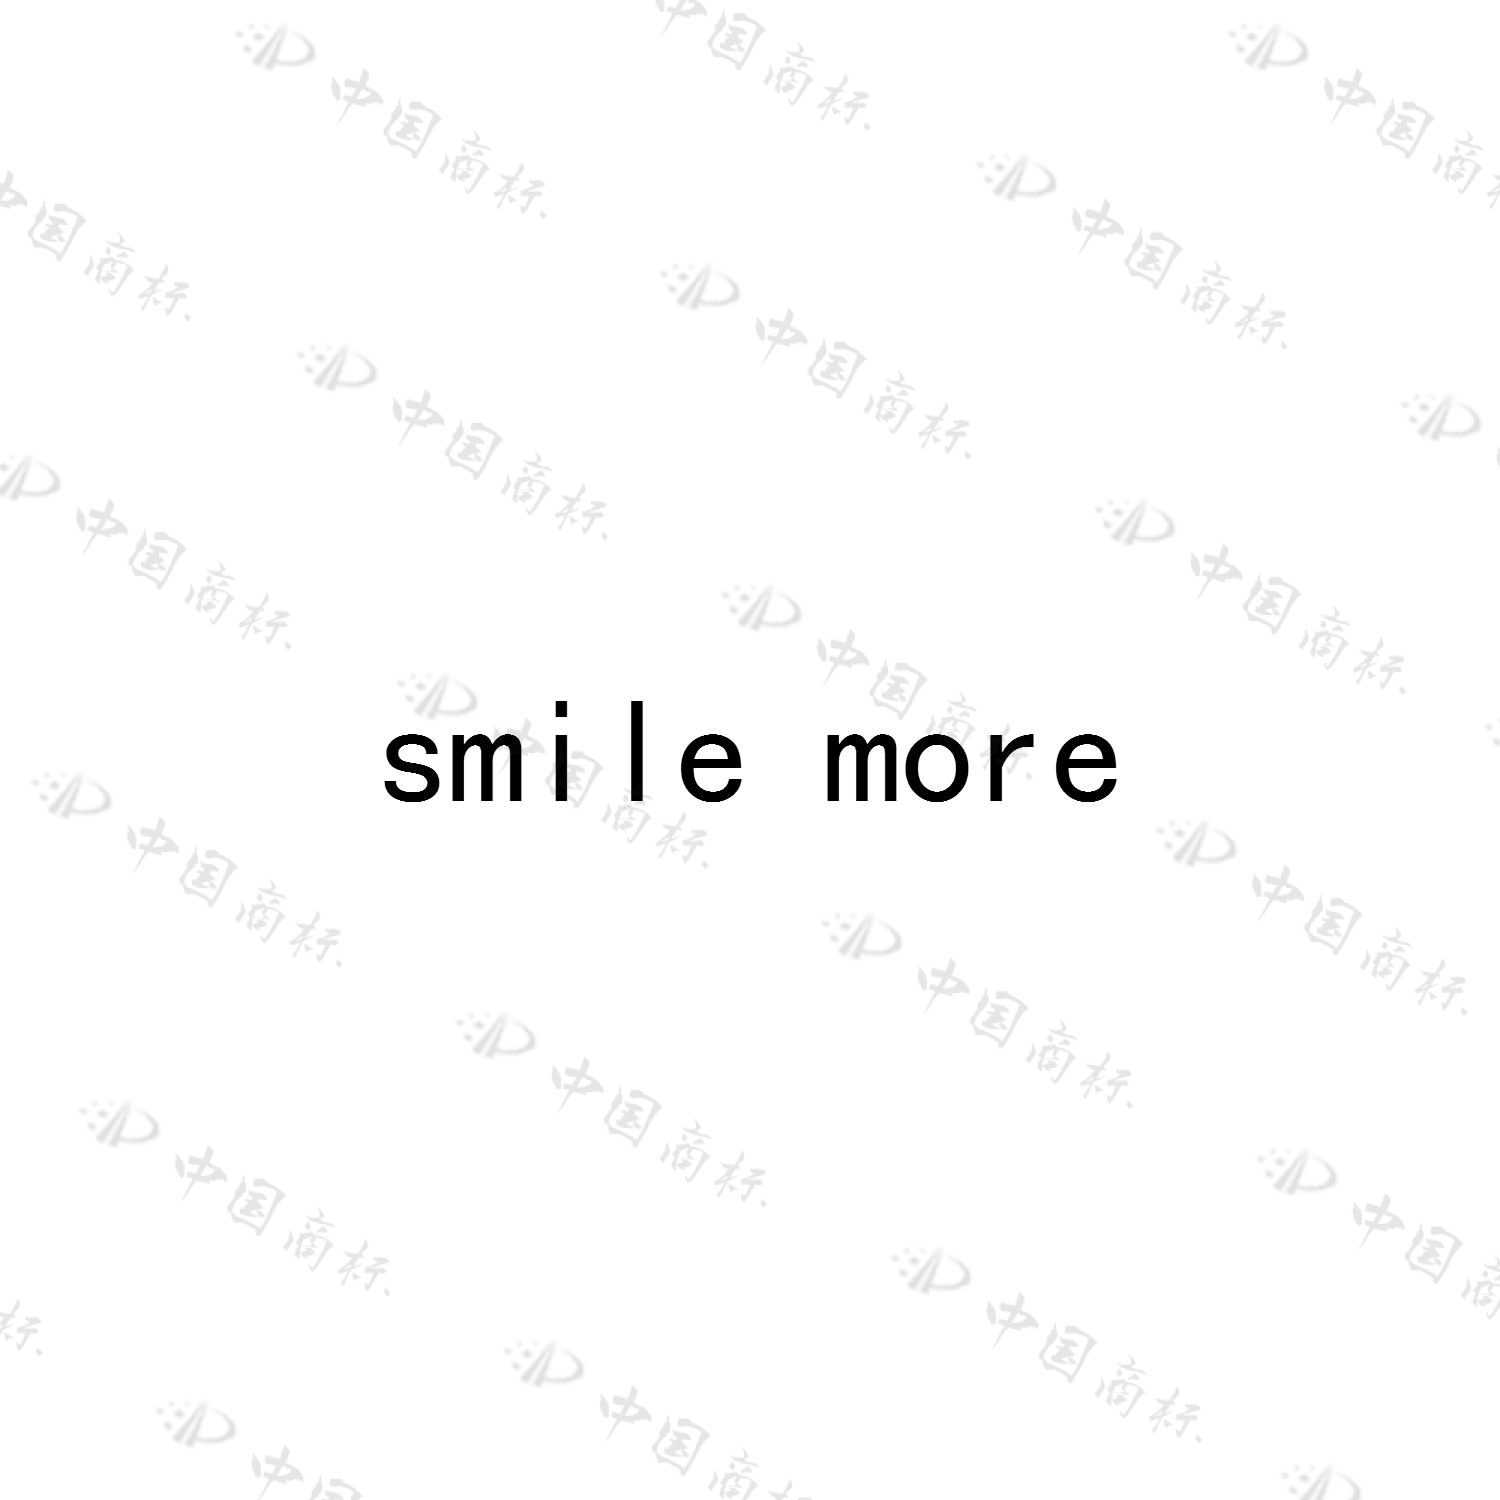 SMILE MORE（笑脸迎人）商标转让,商标出售,商标交易,商标买卖,中国商标网